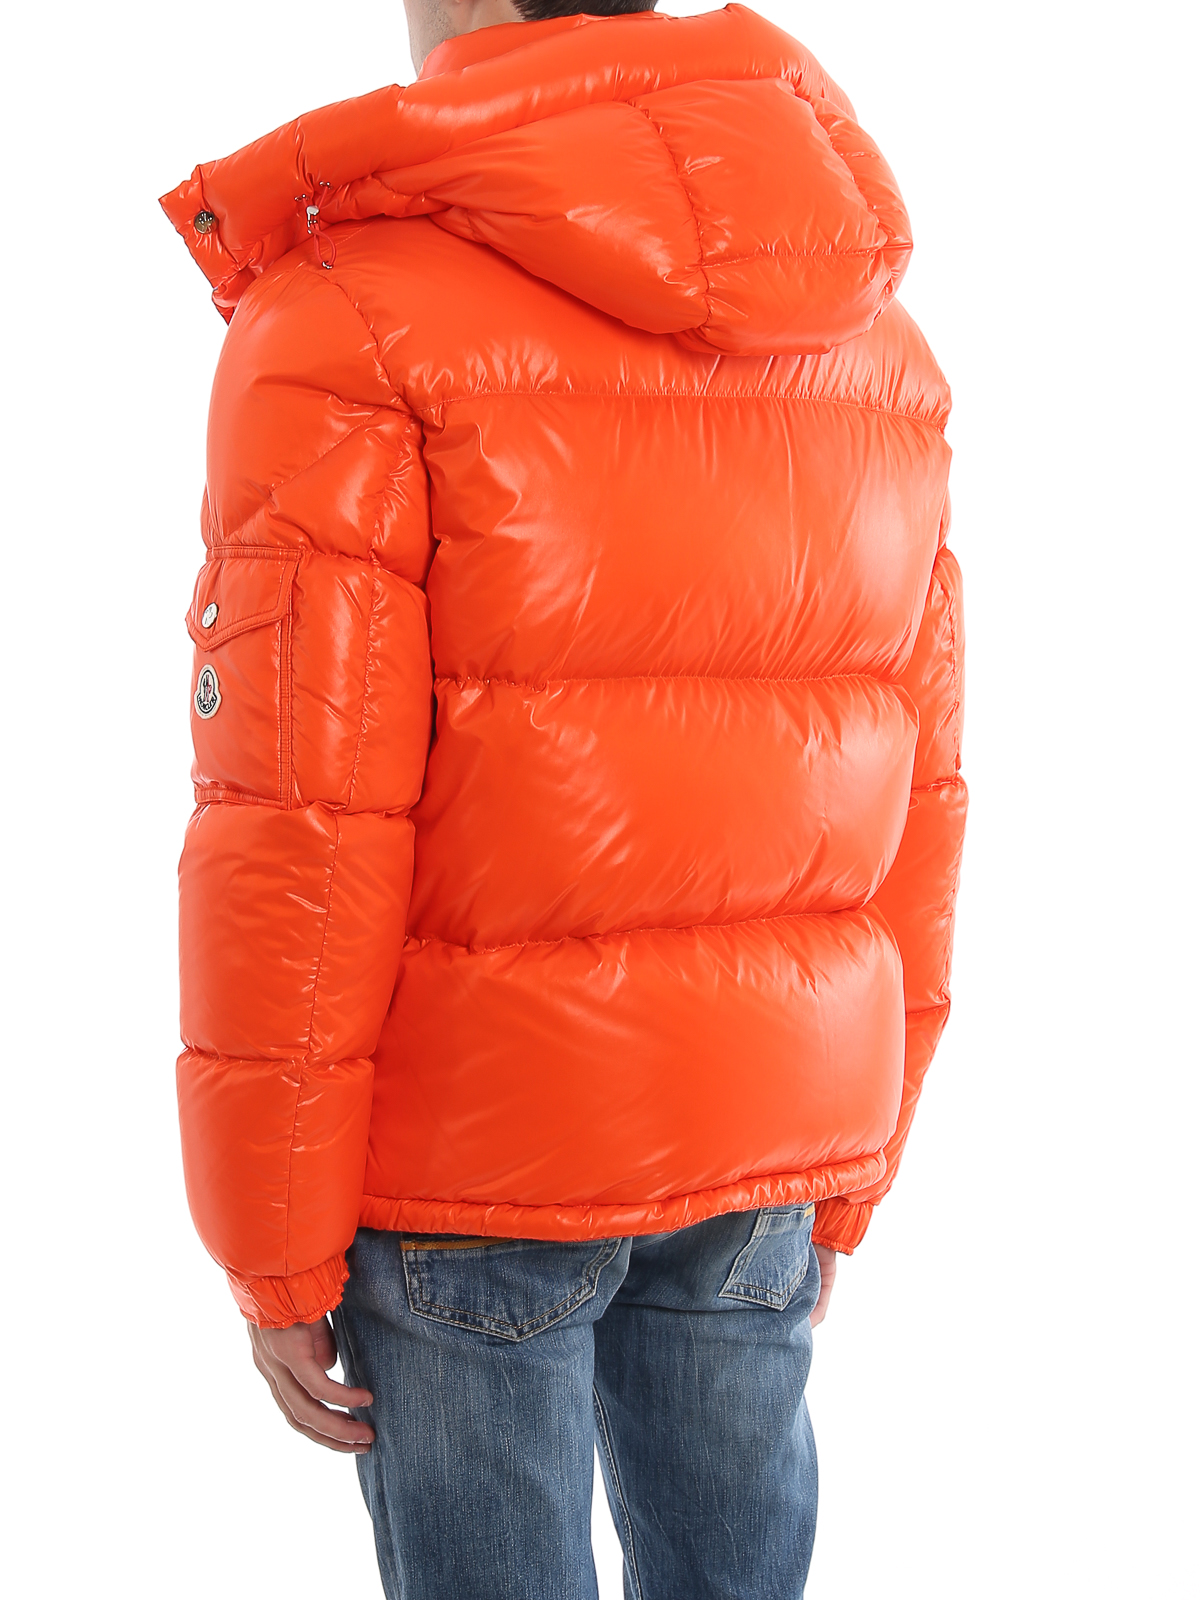 moncler jacket orange,Save up to 18%,www.ilcascinone.com